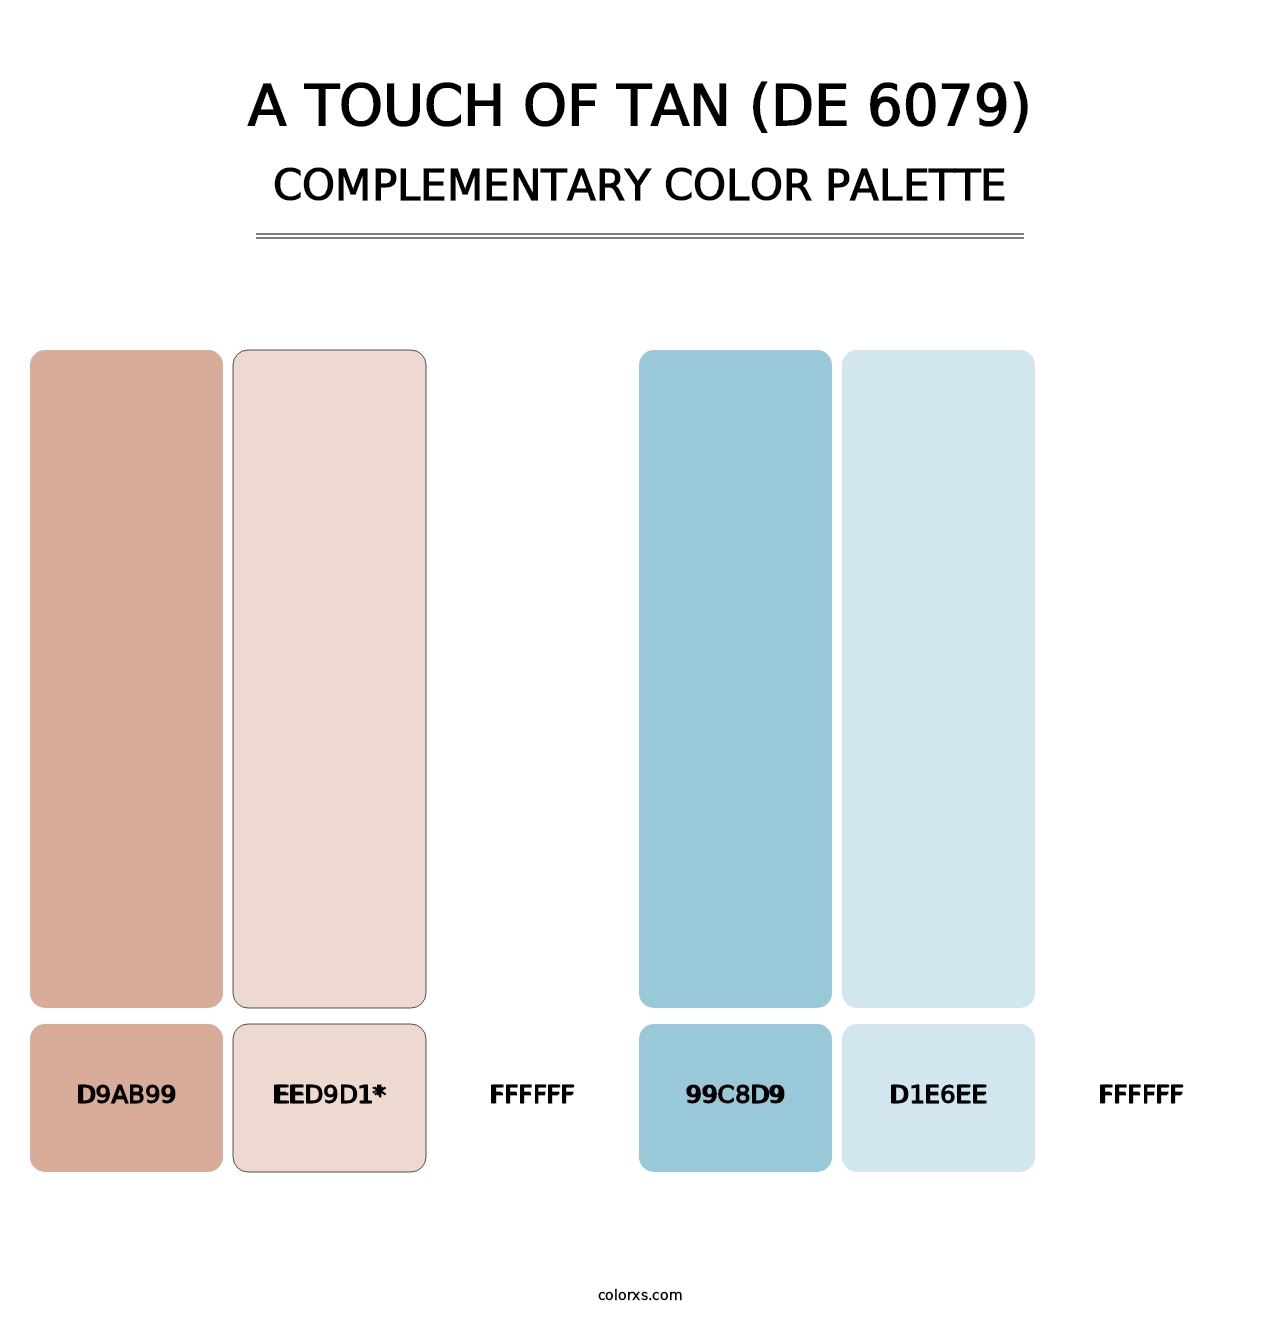 A Touch of Tan (DE 6079) - Complementary Color Palette